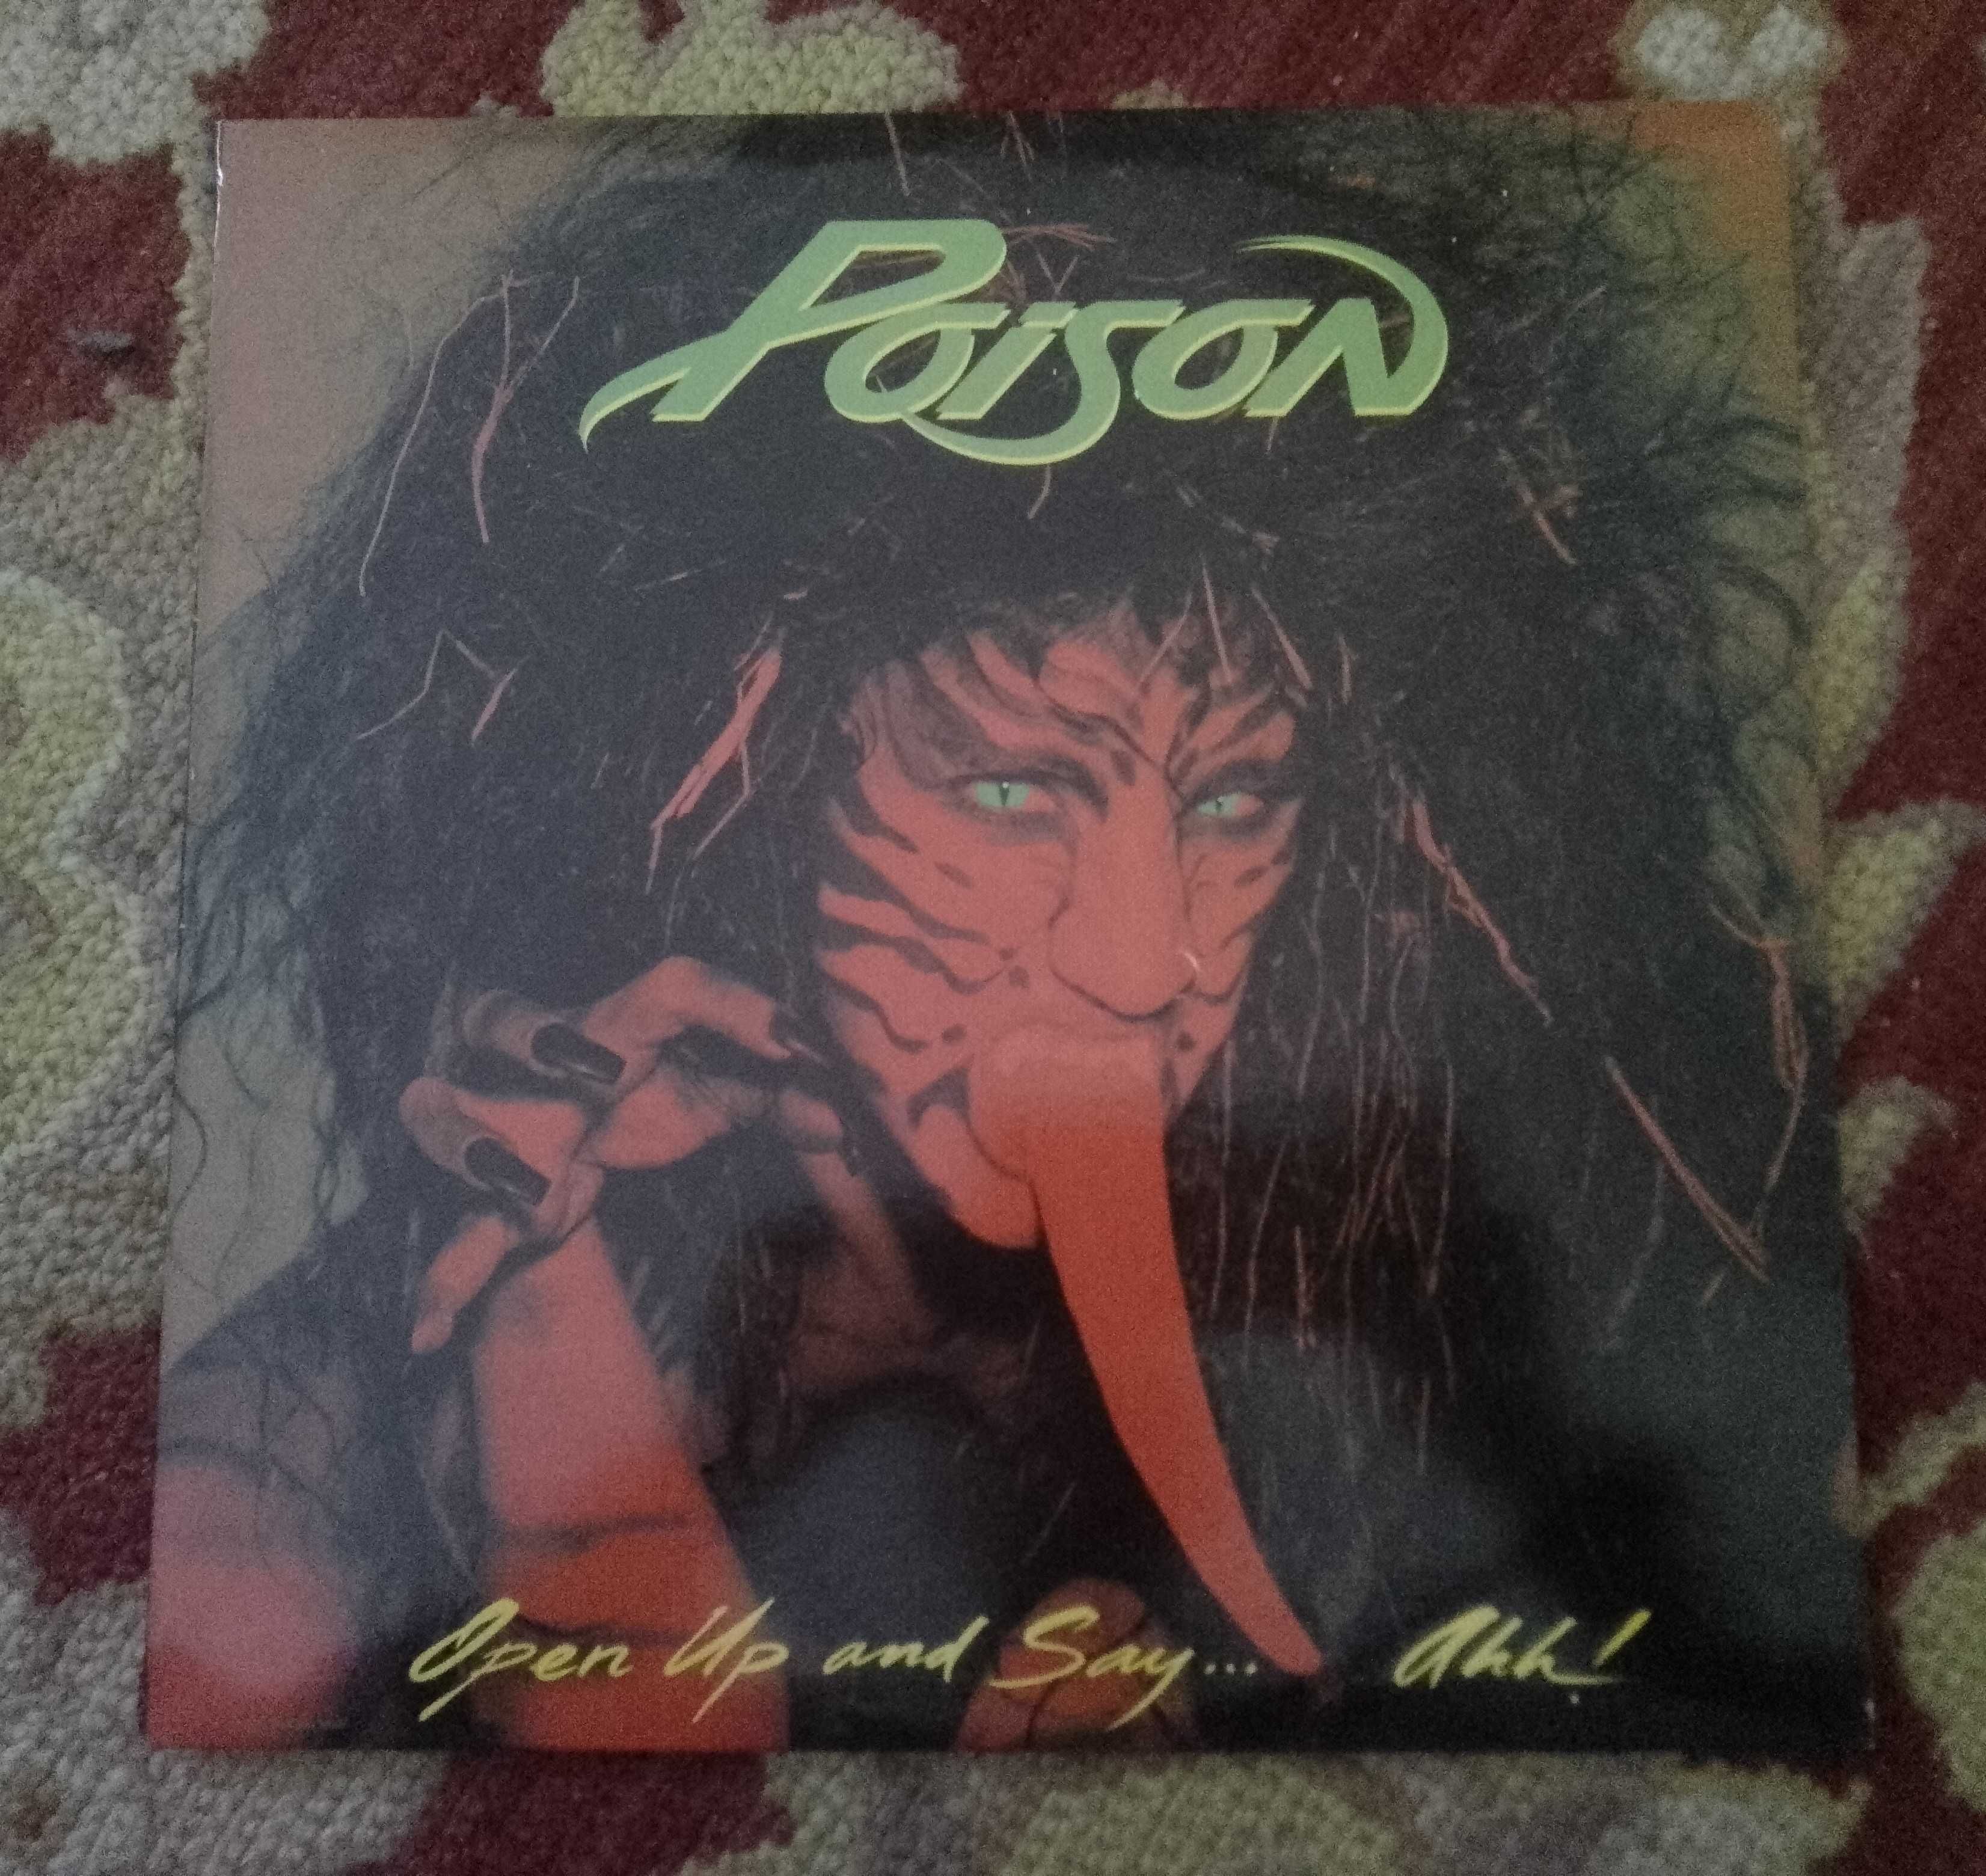 Poison - " Open up and Say ... Ahh! " ,,, LP em vinil